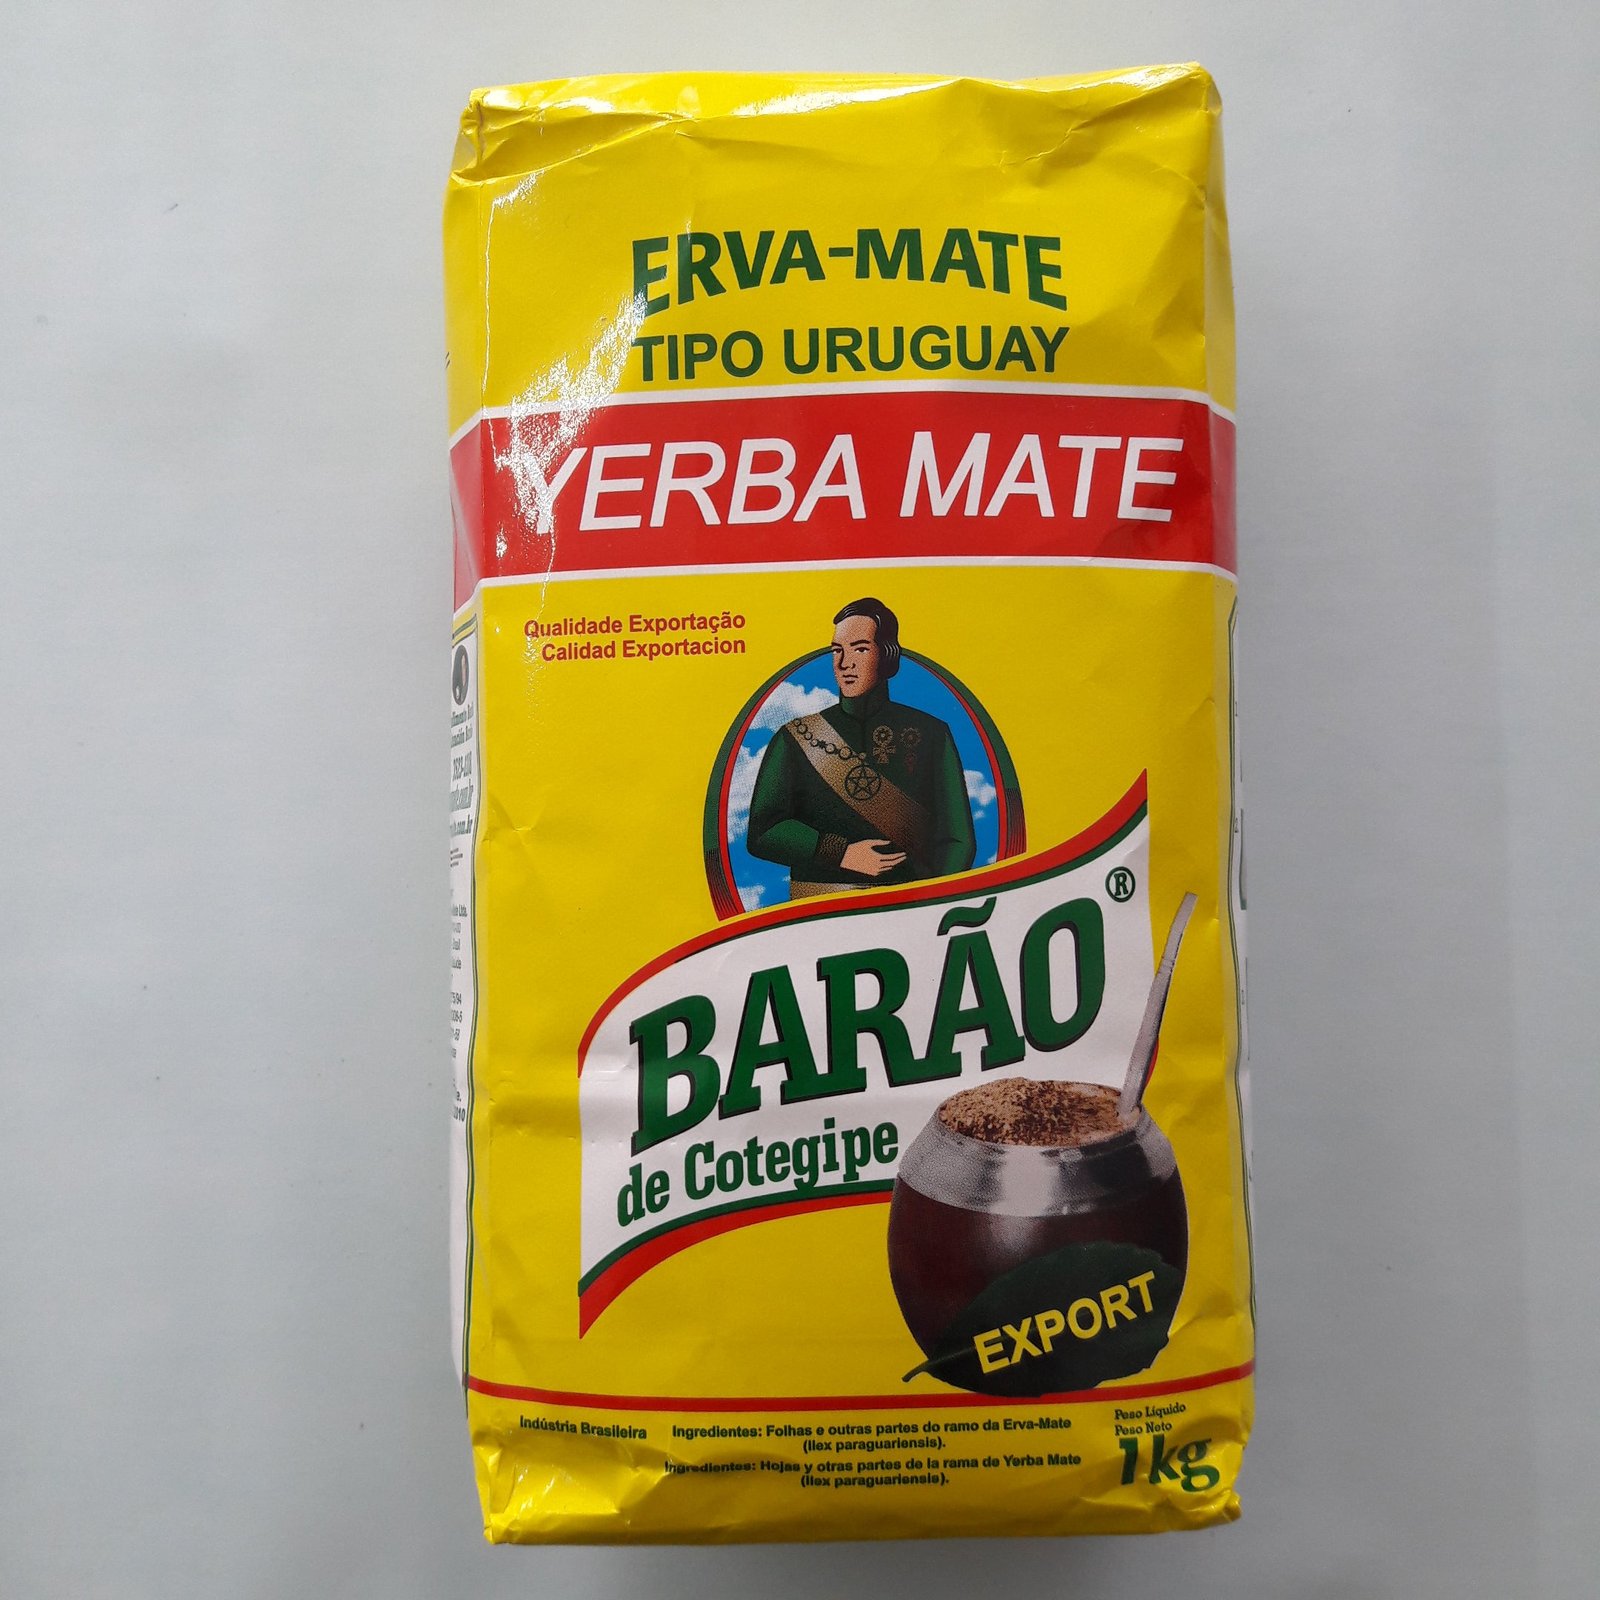 Erva-Mate Barão de Cotegipe Export 1kg